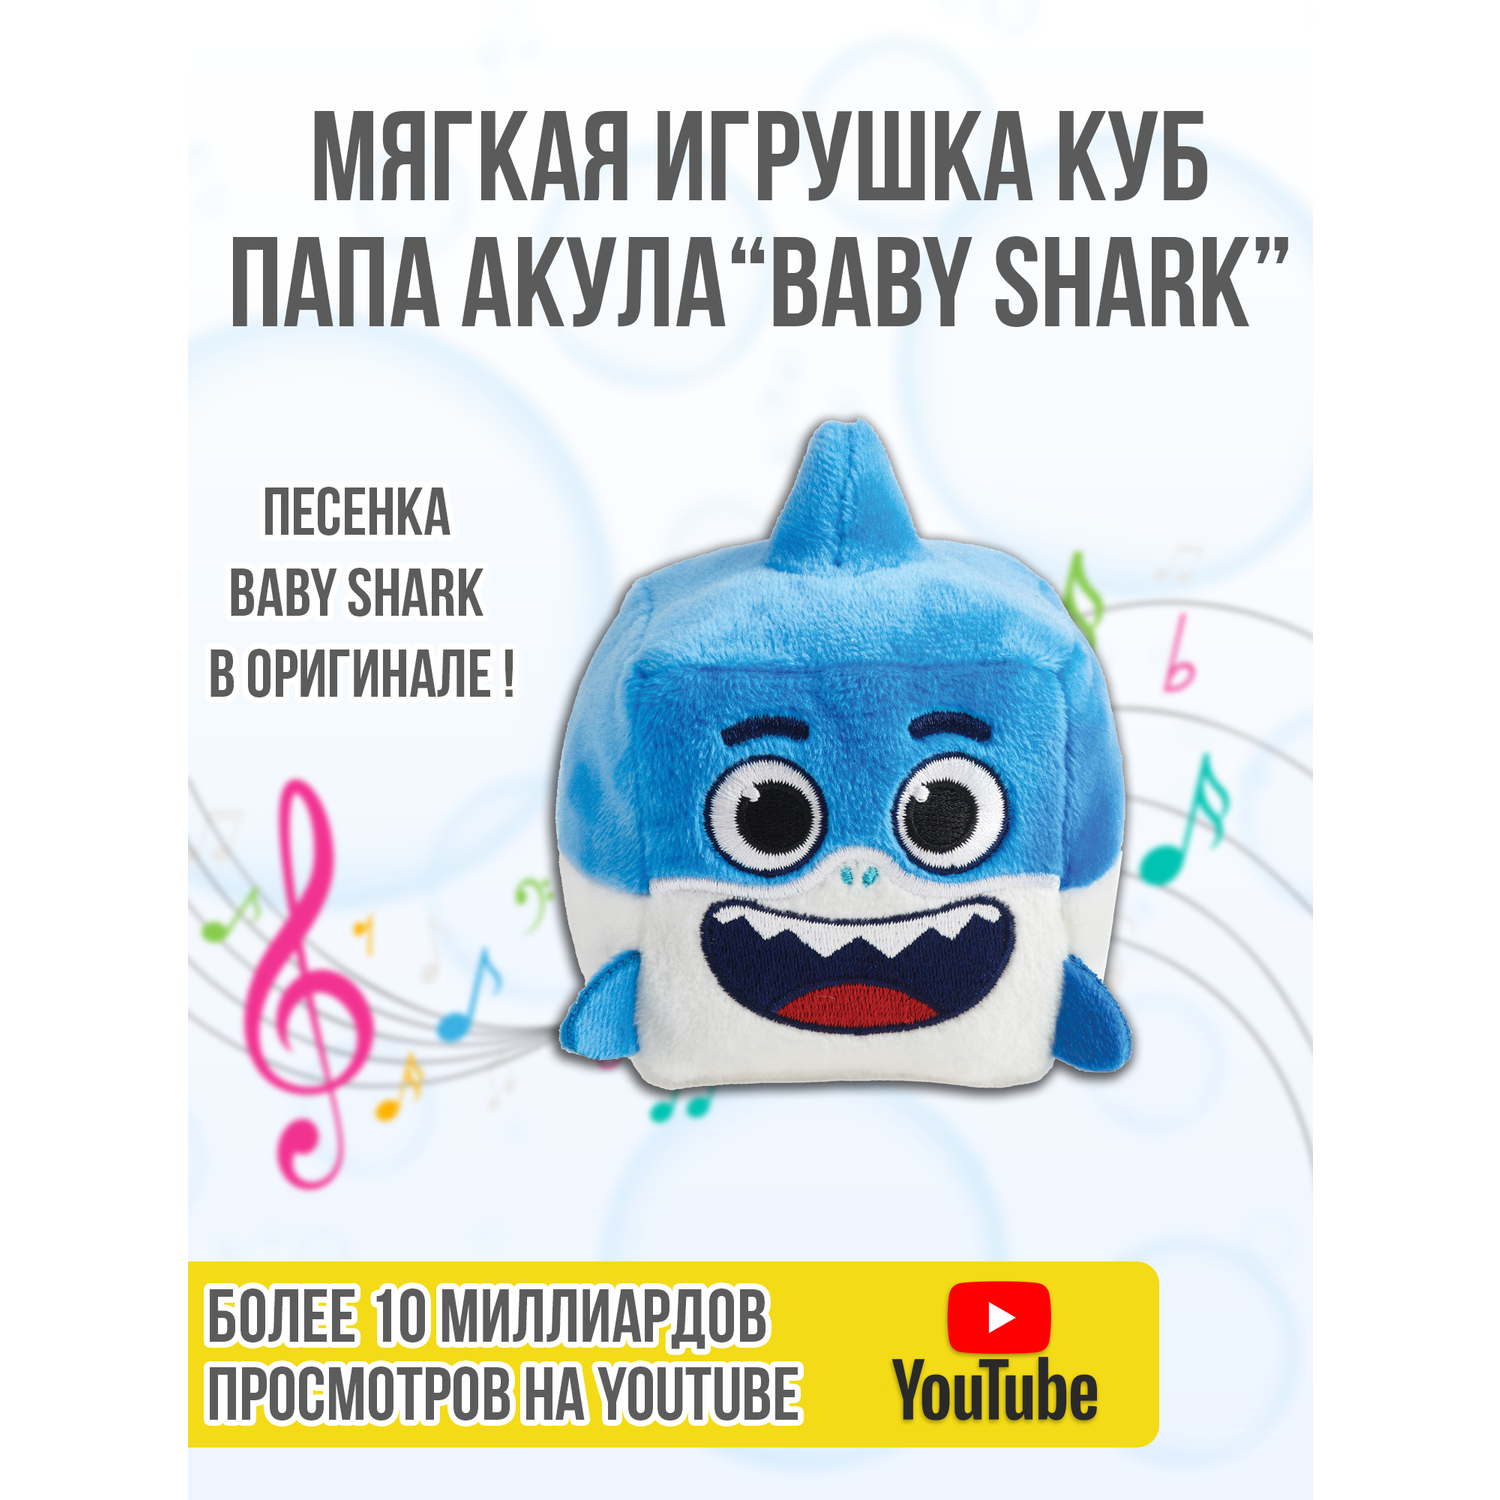 Плюшевый кубик Wow Wee Музыкальный Папа акула Baby Shark 61503 - фото 4